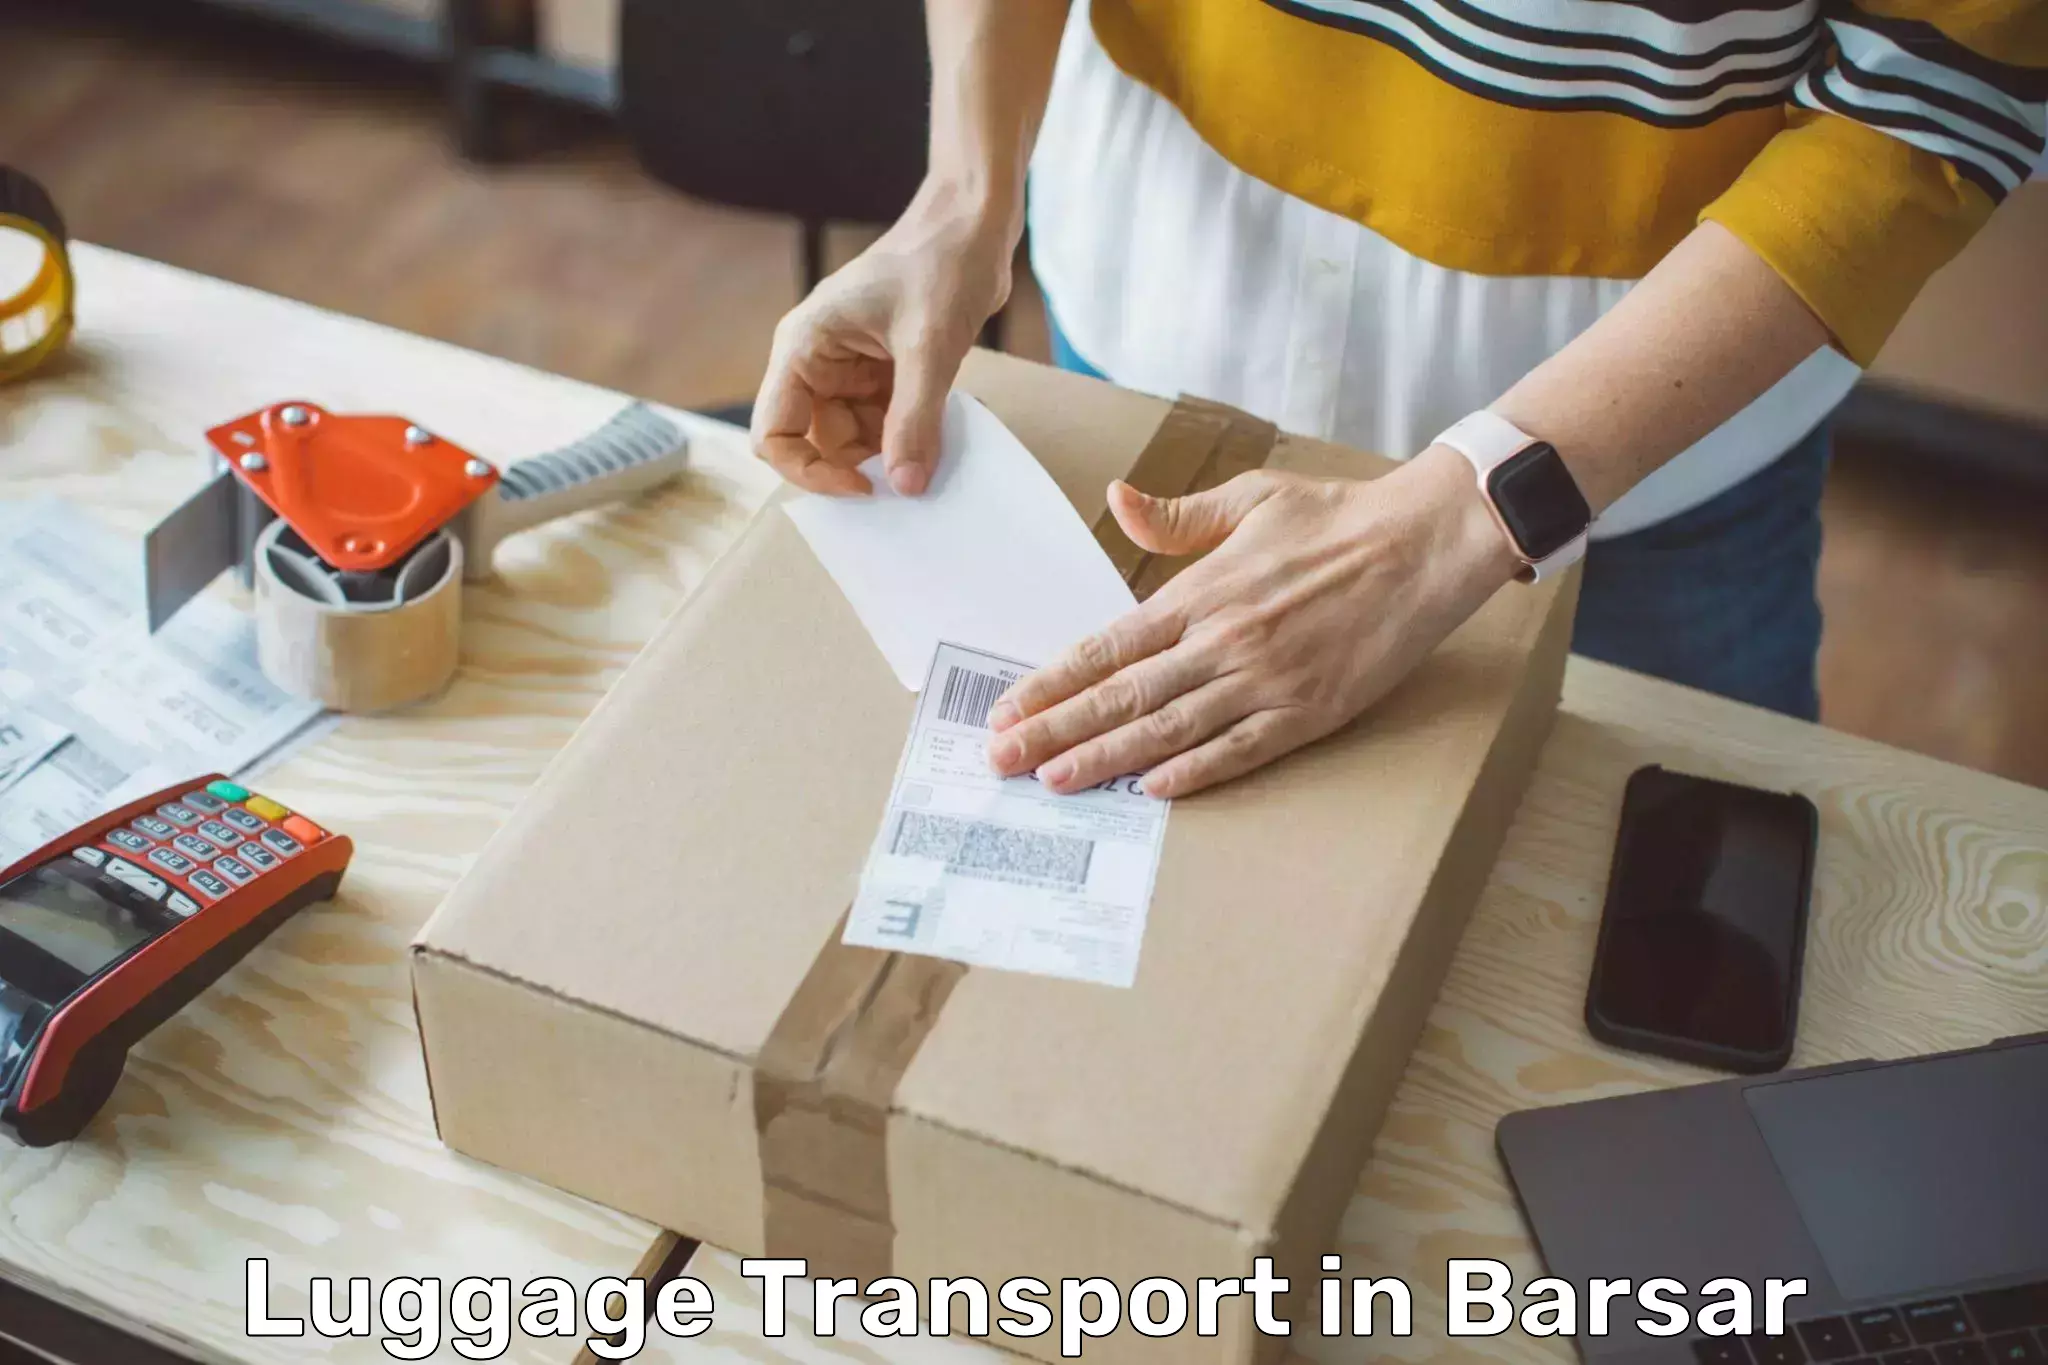 Reliable baggage delivery in Barsar